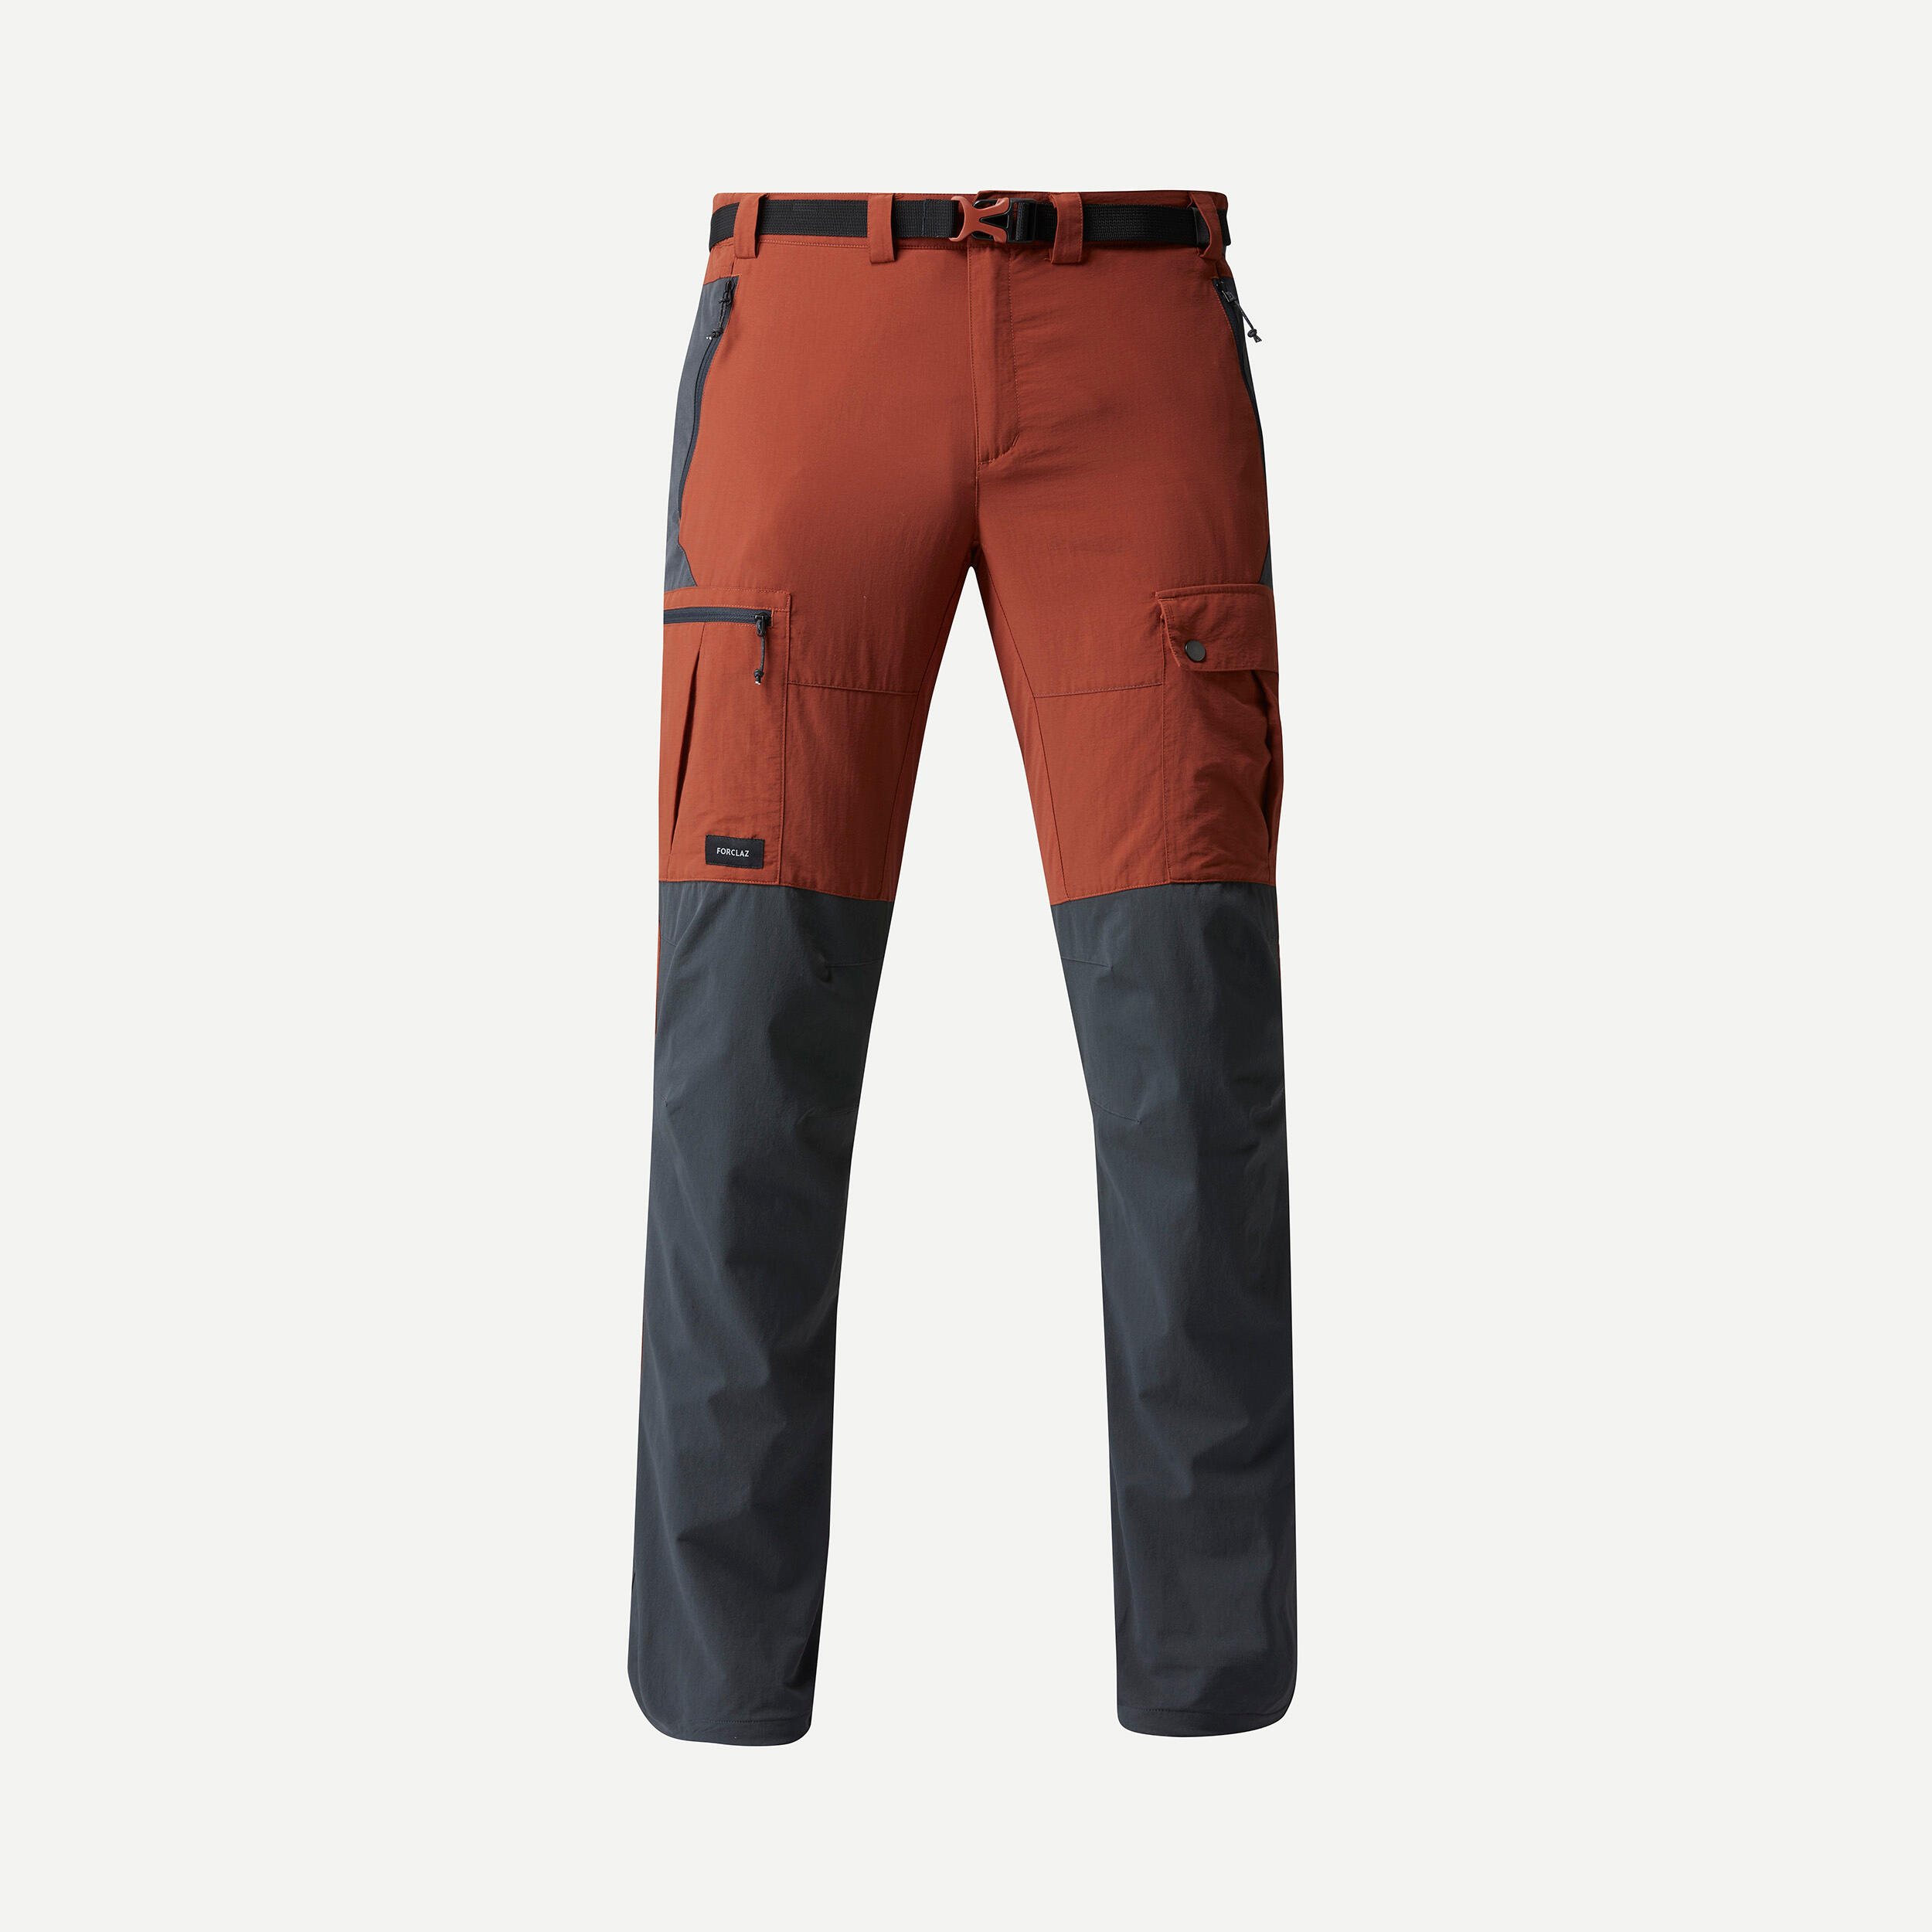 GOKYO K2 Cold Weather Trekking & Outdoor Pants Grey : Amazon.in: Clothing &  Accessories